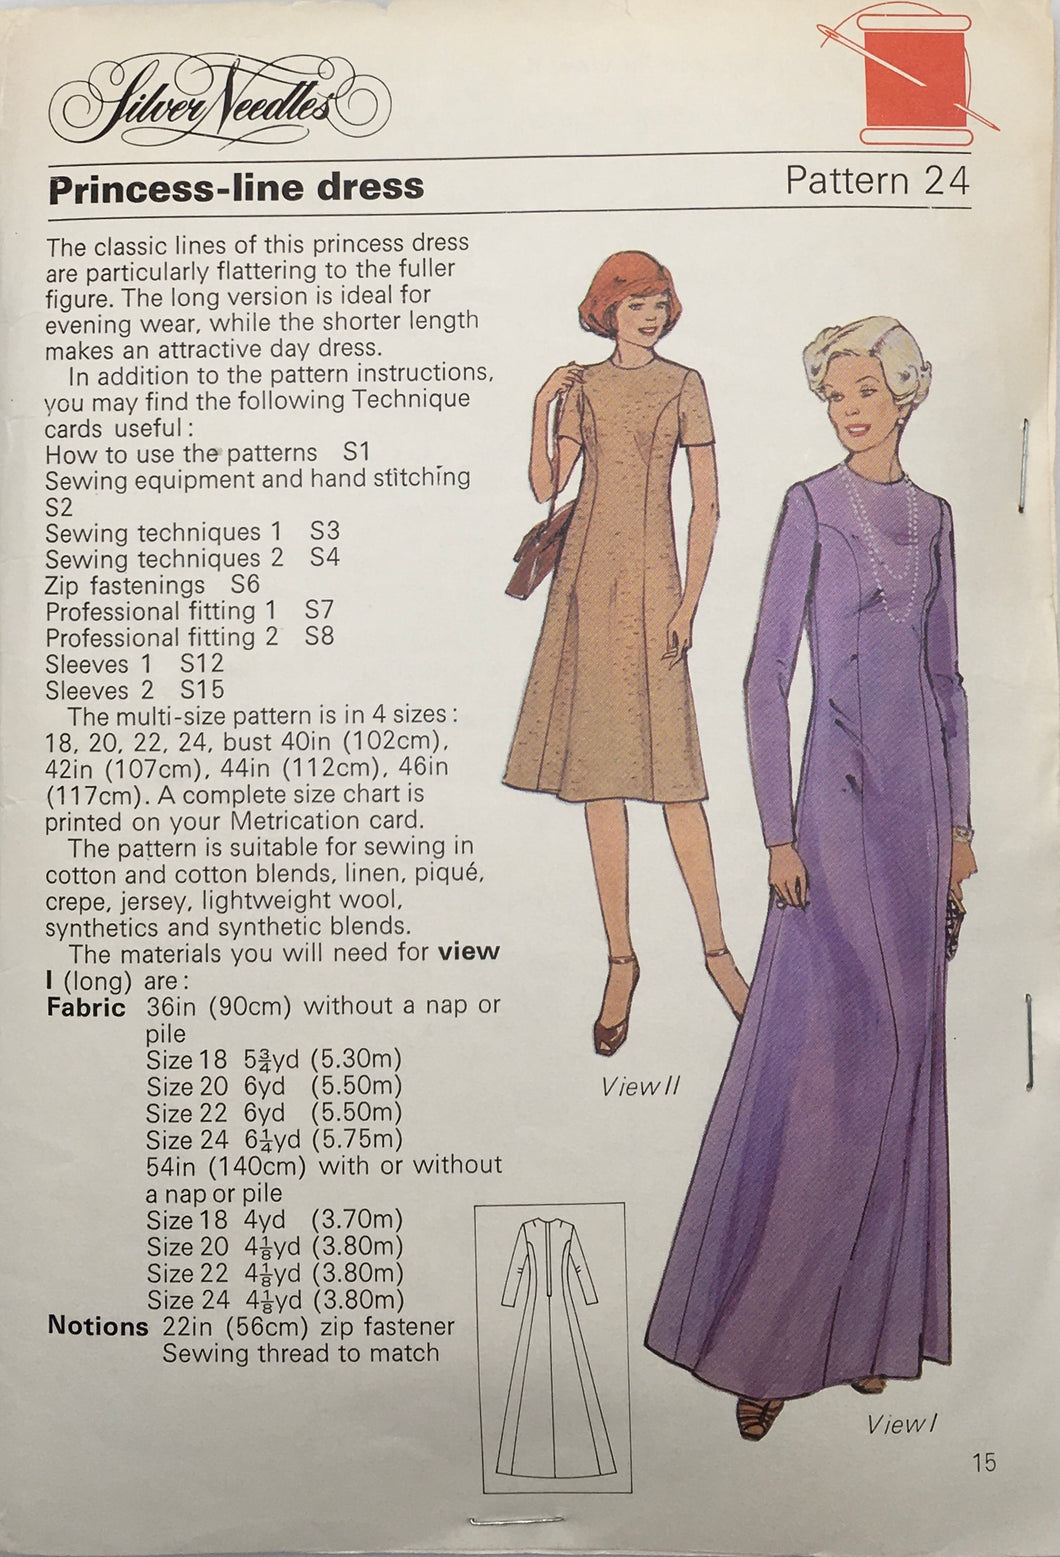 1977 Sewing Pattern: Silver Needles Pattern 24